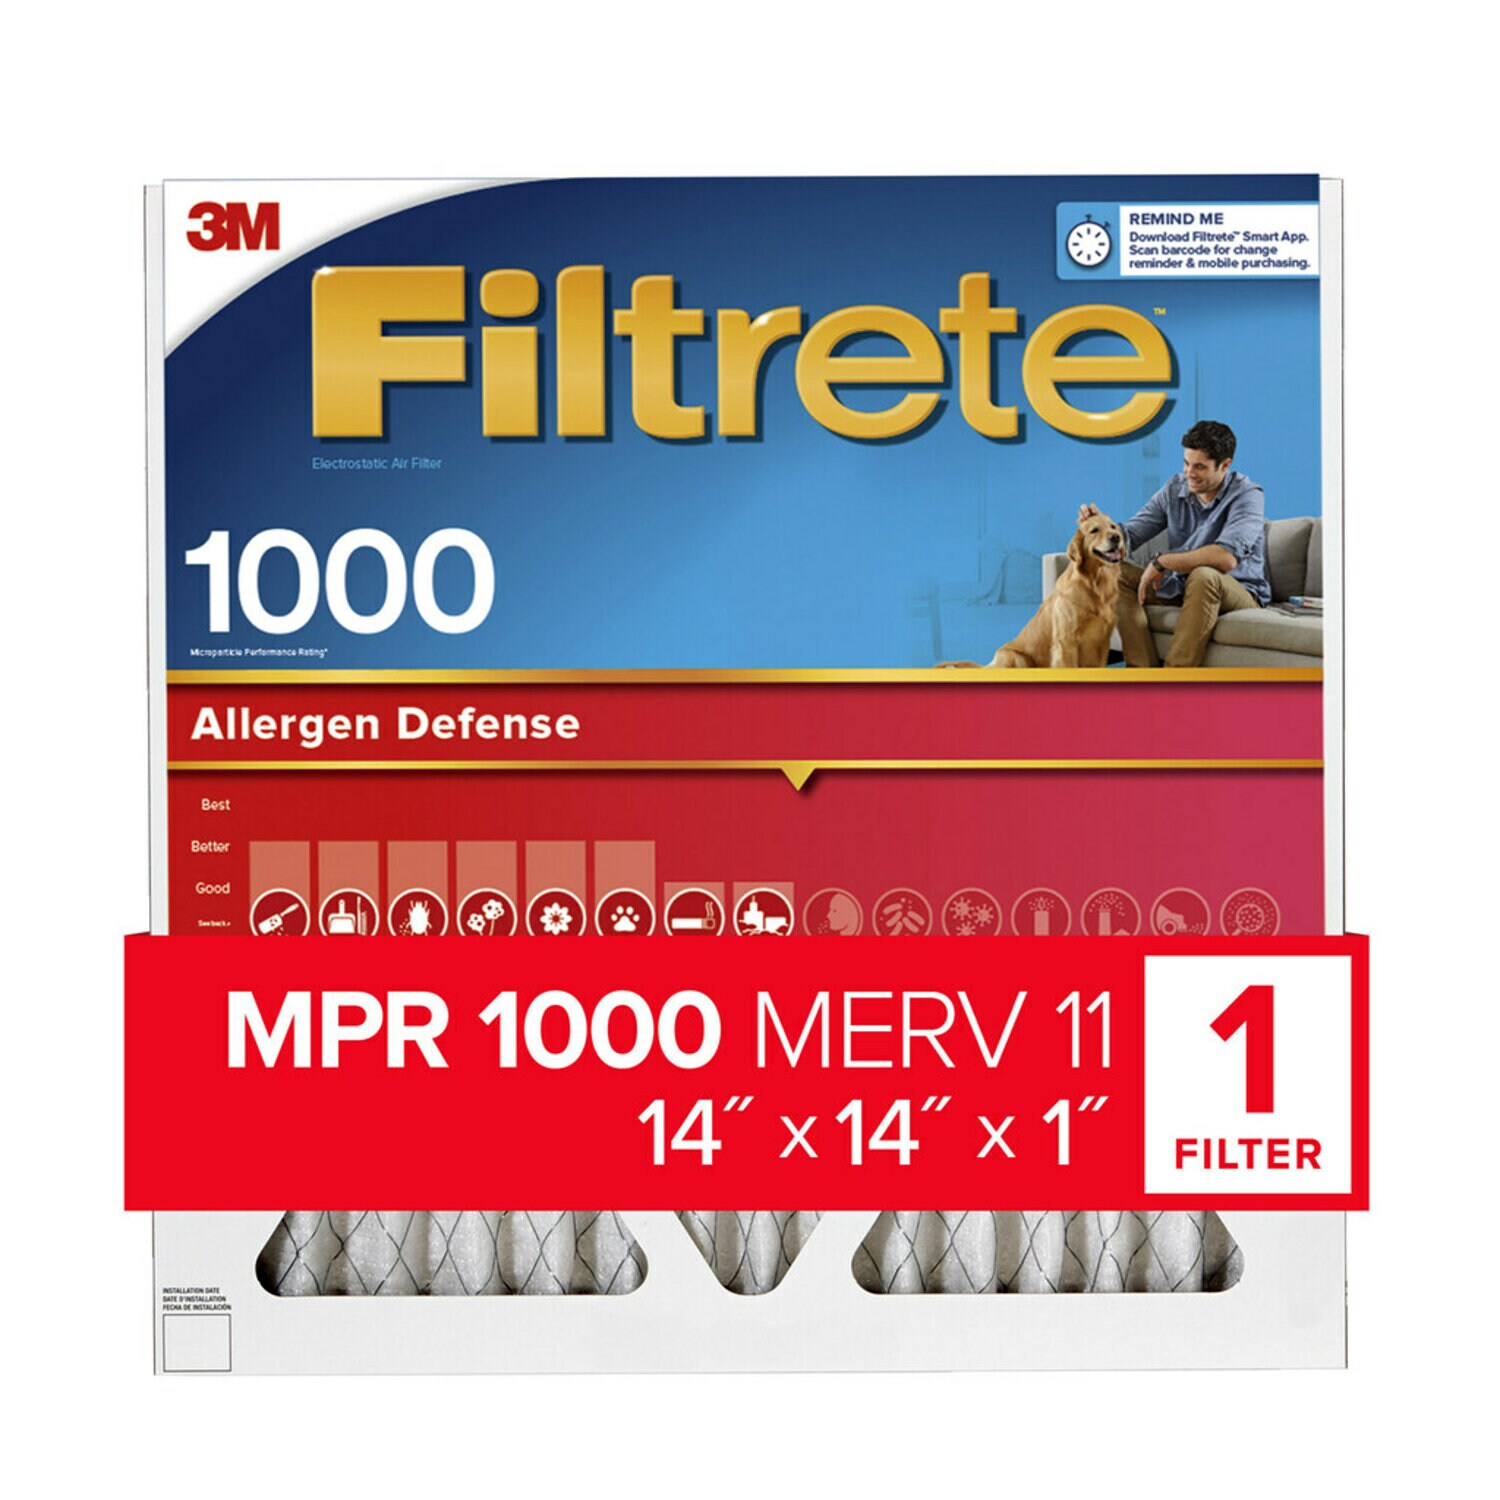 7100188691 - Filtrete Allergen Defense Air Filter, 1000 MPR, AL11-4, 14 in x 14 in x
1 in (35,5 cm x 35,5 cm x 2,5 cm)